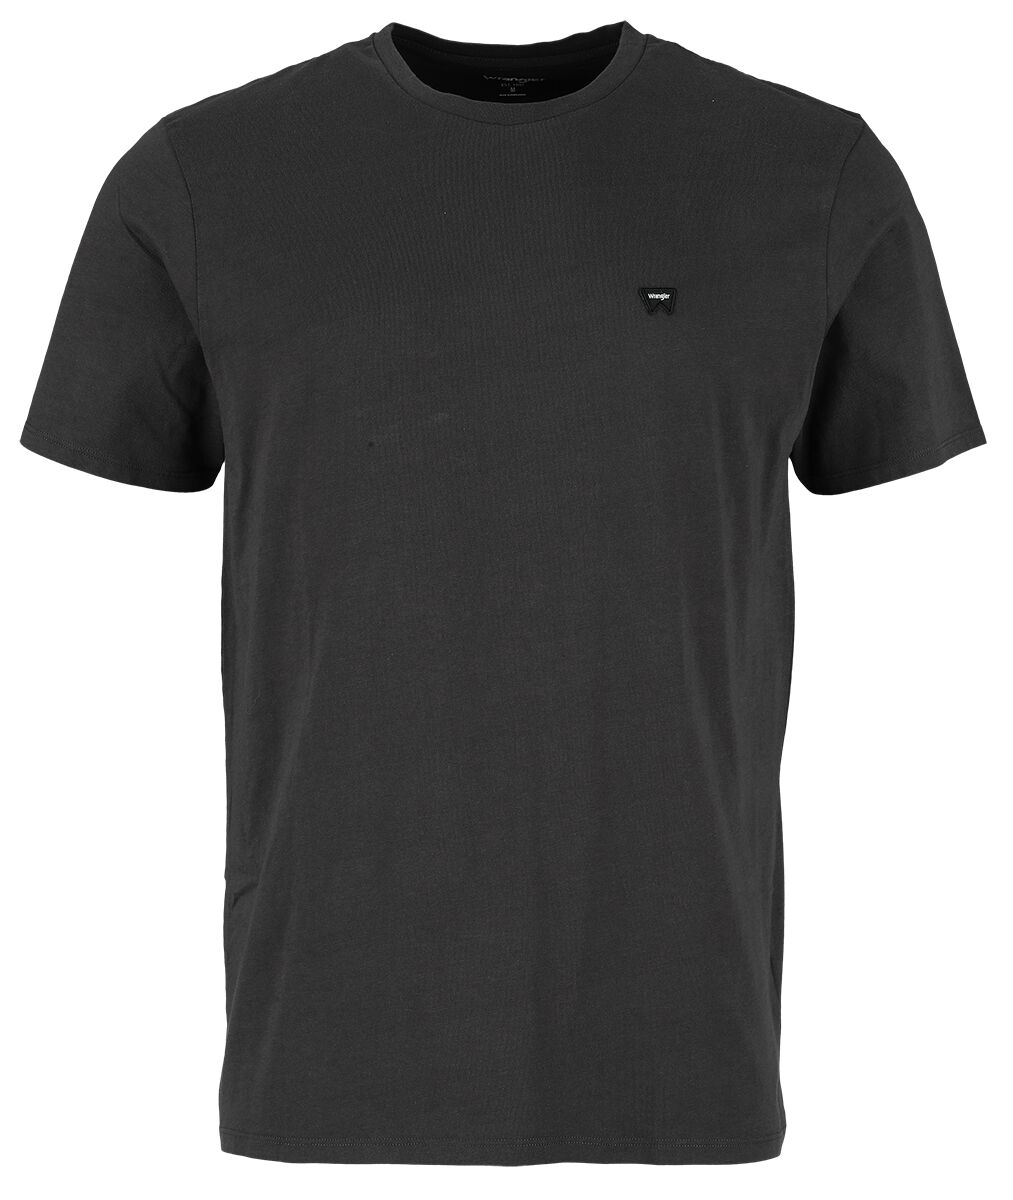 Image of T-Shirt di Wrangler - Sign Off T-shirt Faded Black - S a XXL - Uomo - nero